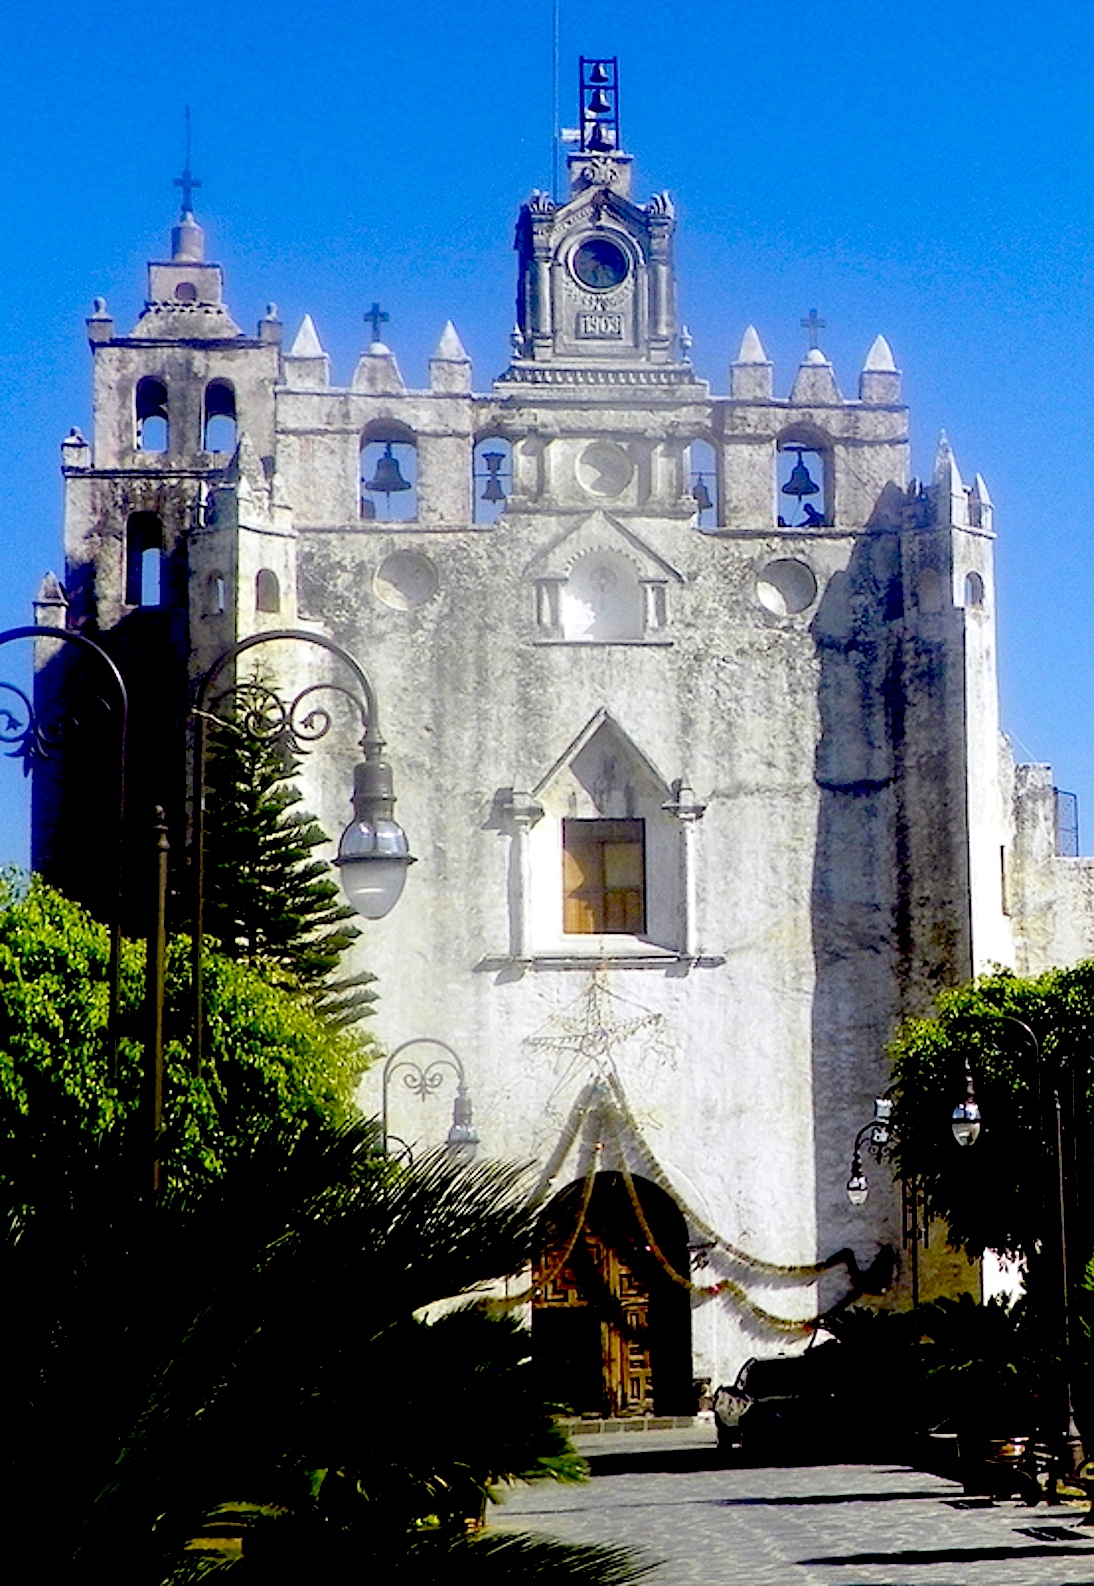 colonialmexico: San Mateo Atlatlahucan, the architecture